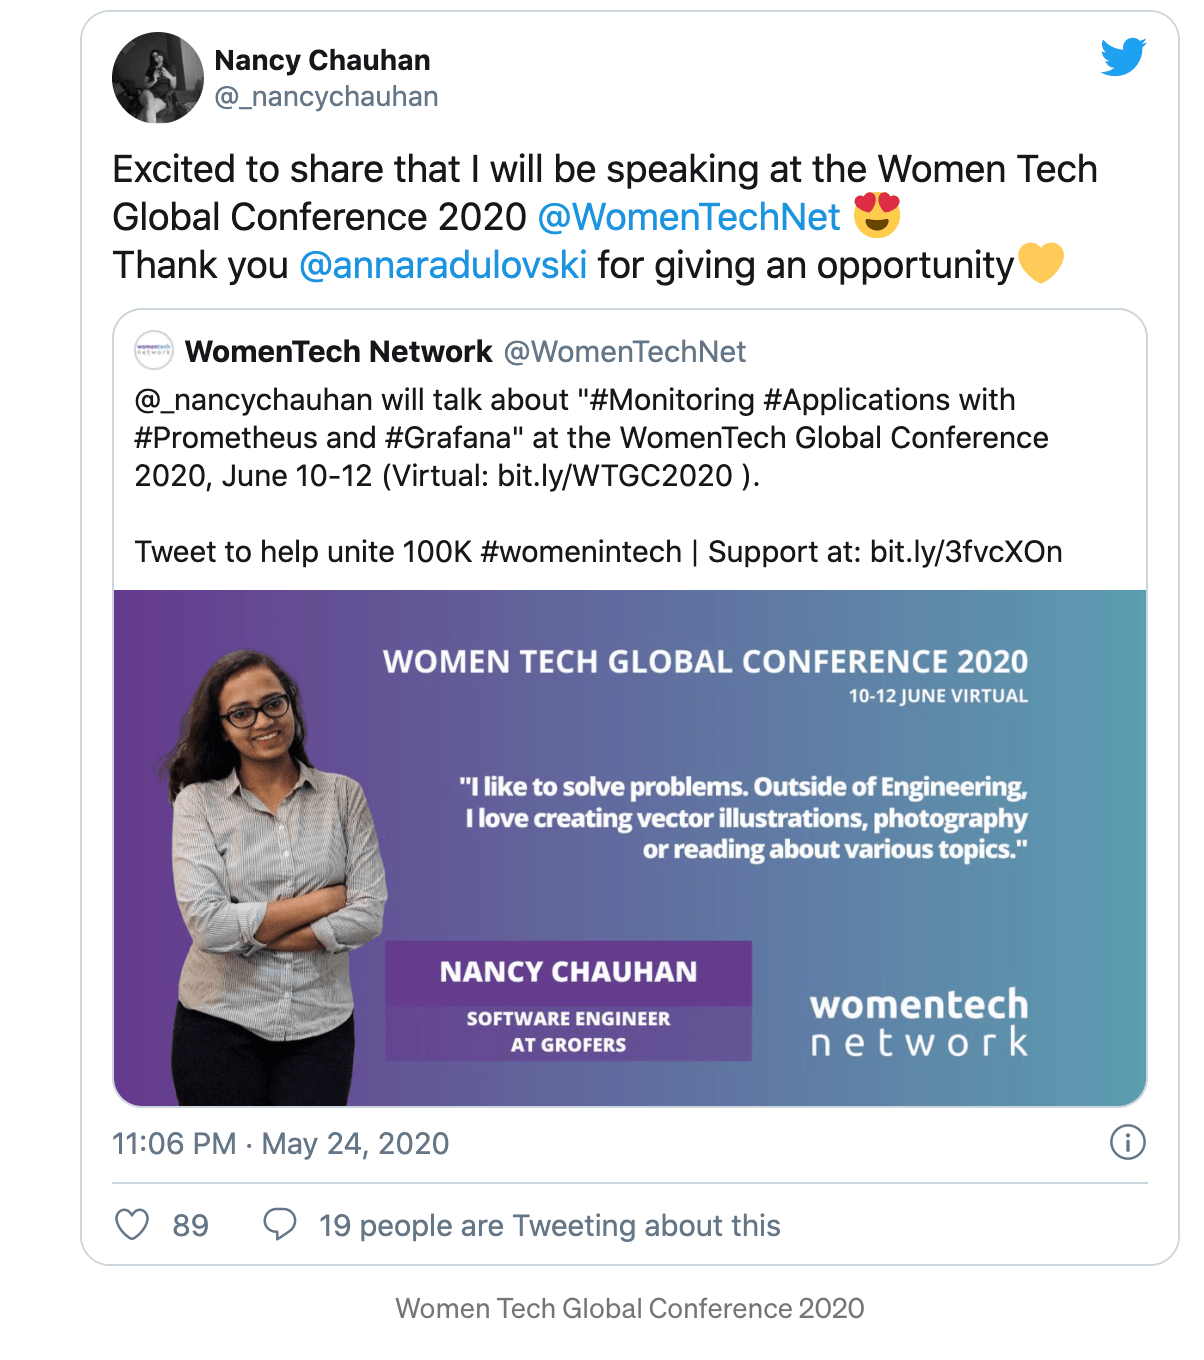 Women Tech Global Conference 2020